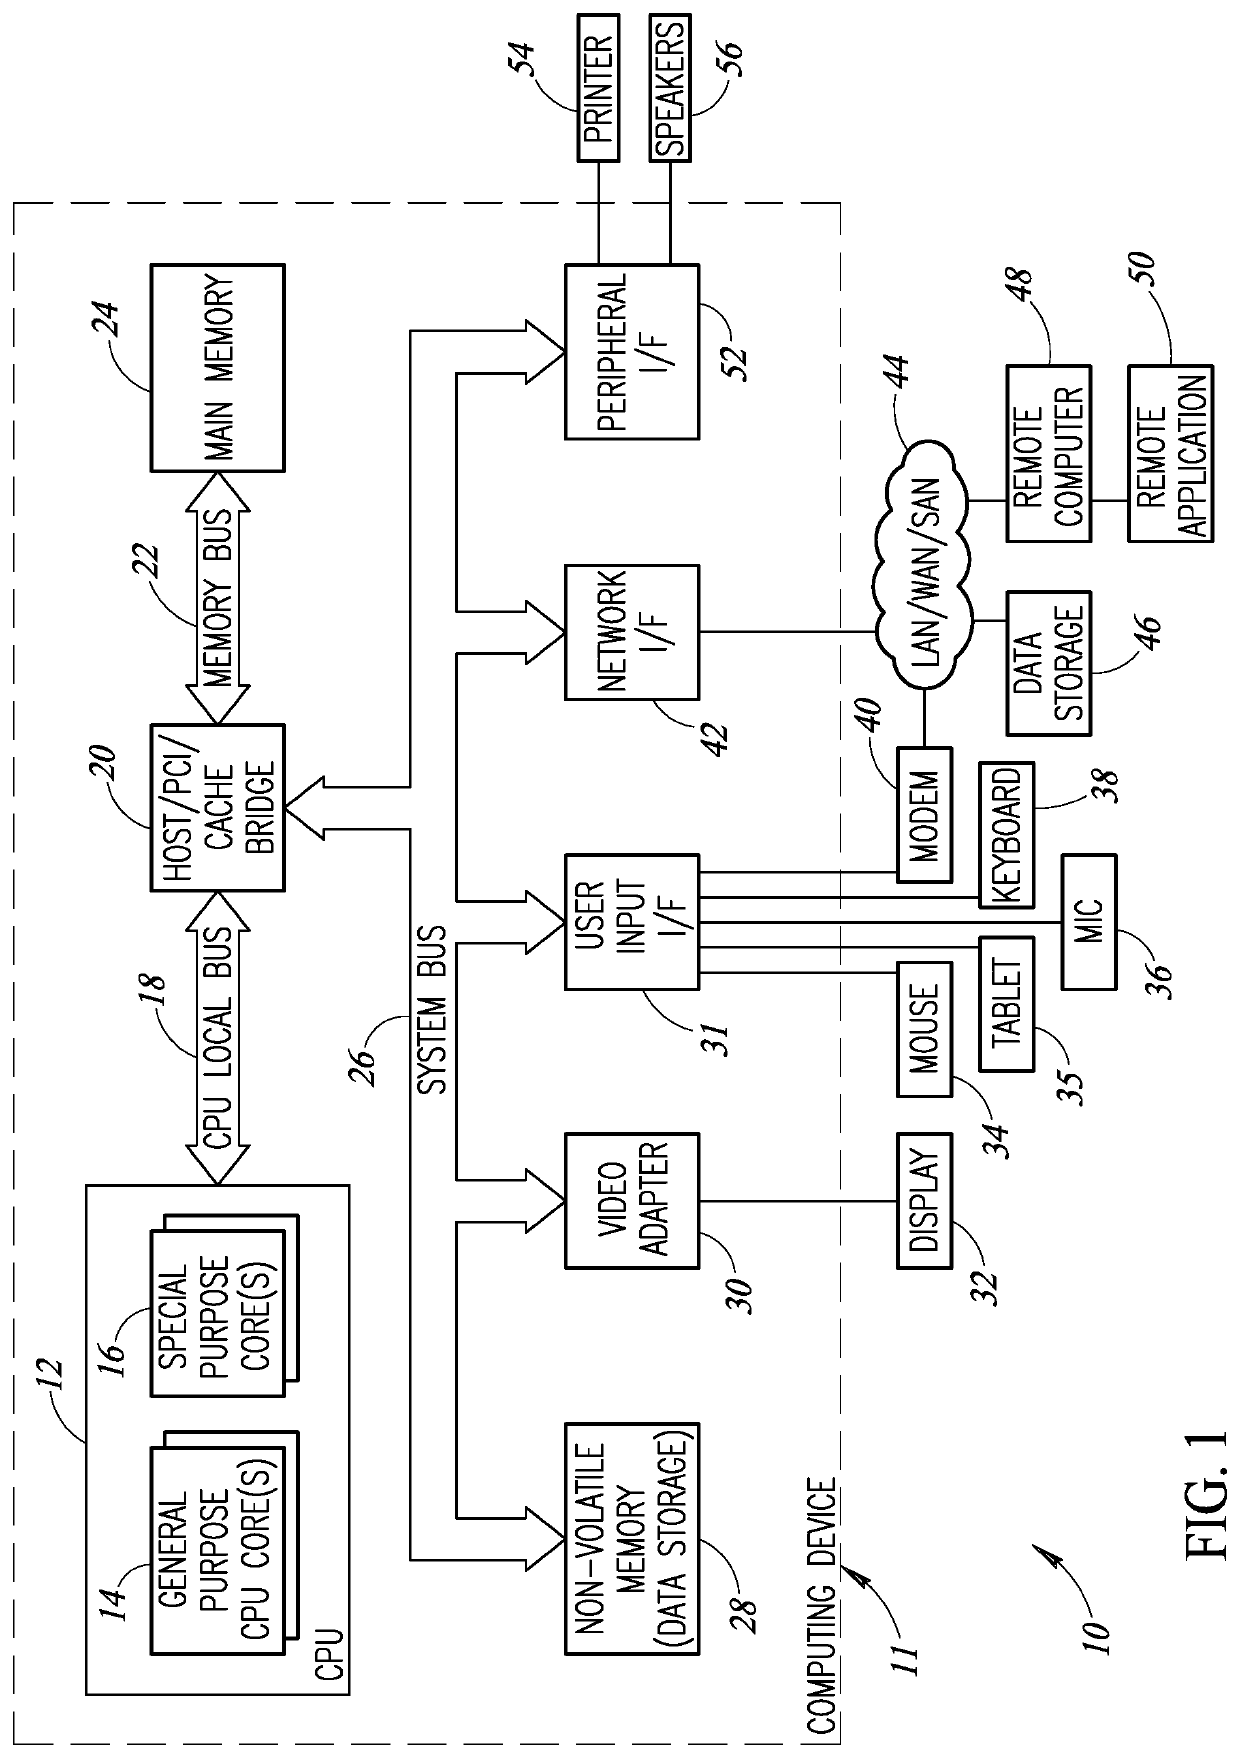 Data stream fault detection mechanism in an artificial neural network processor